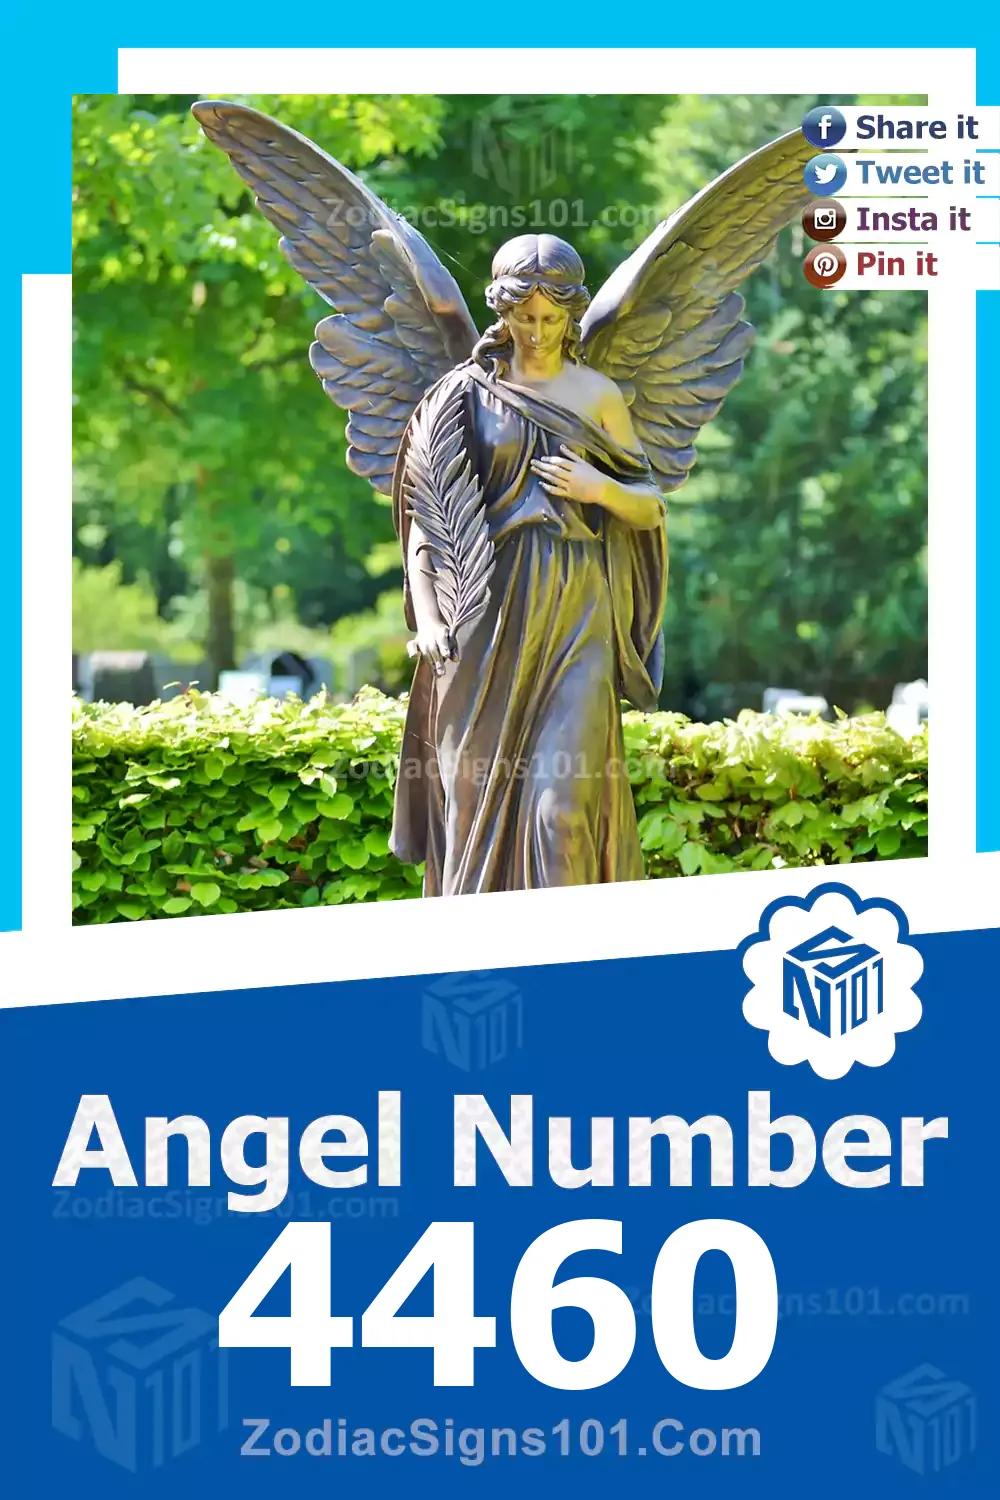 4460-Angel-Number-Meaning.jpg